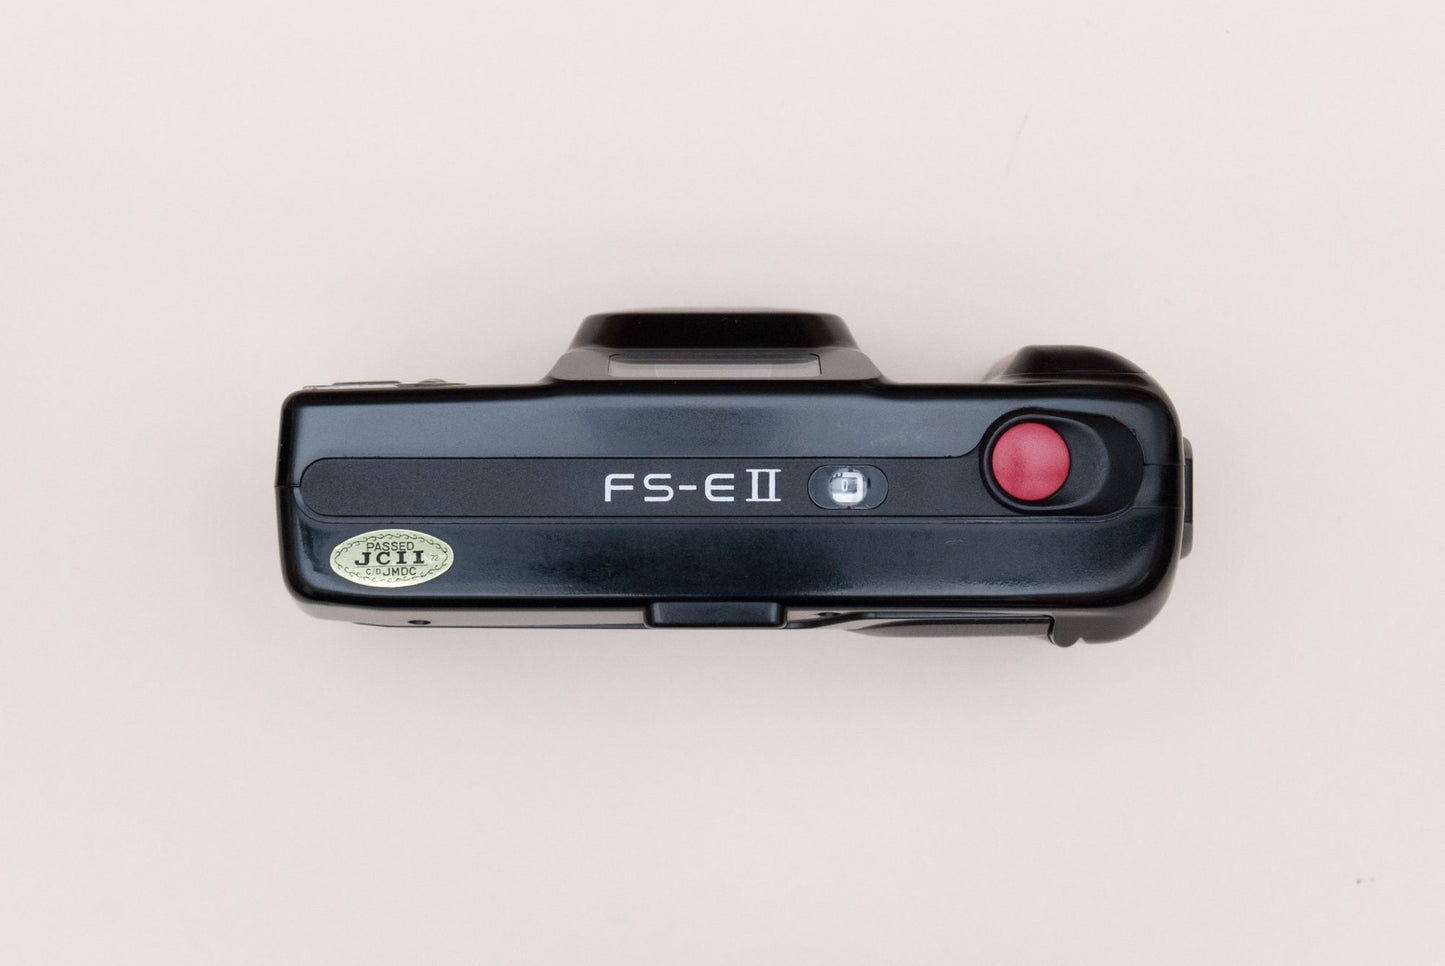 Minolta FS-E II Compact 35mm Point and Shoot Film Camera